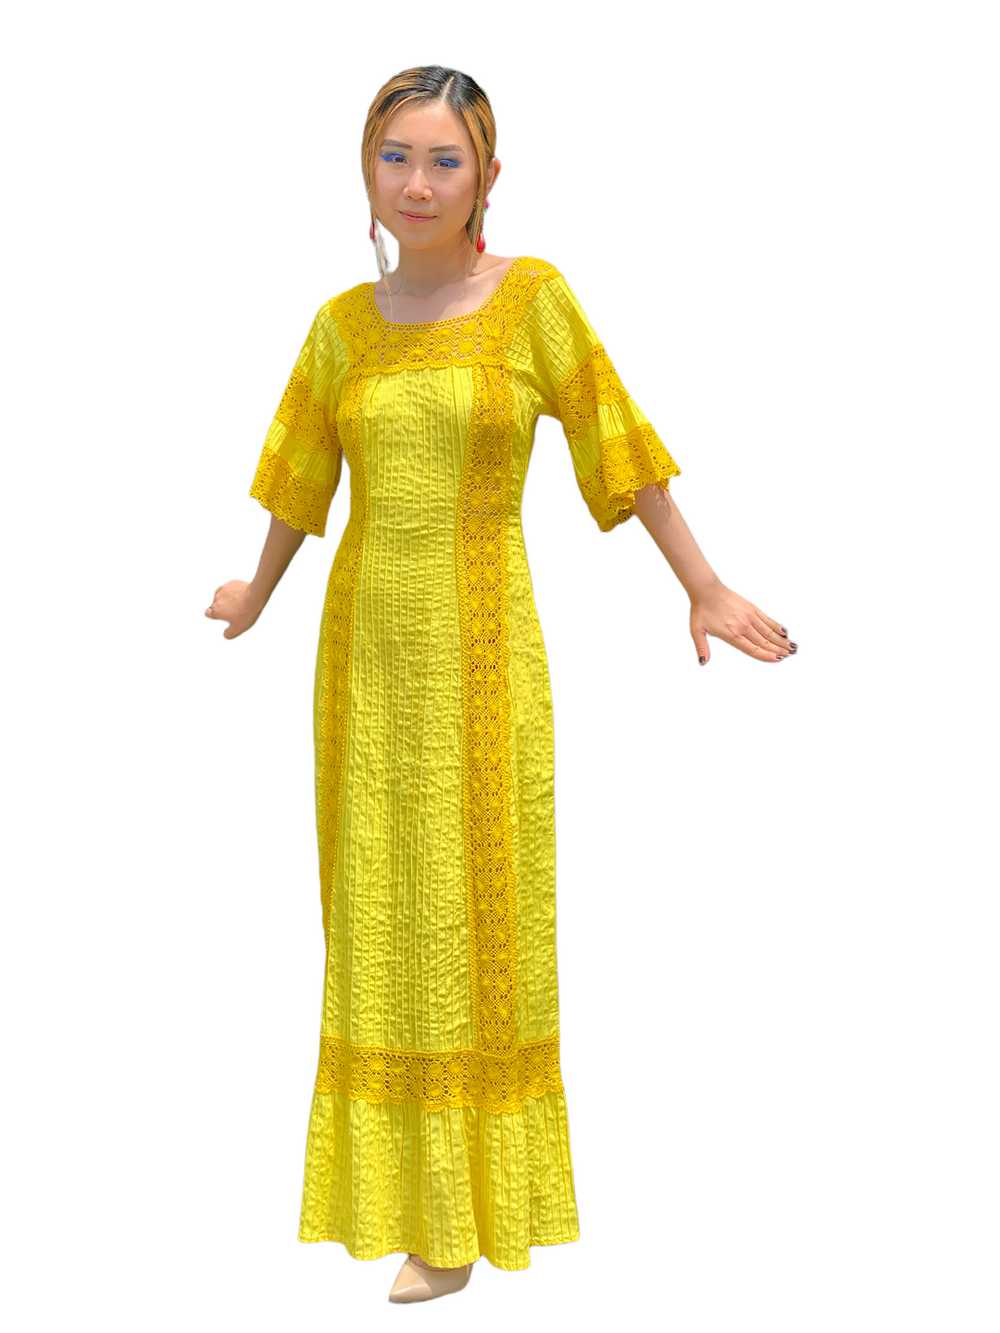 Vintage Yellow Lace Traditonal Dress - image 1